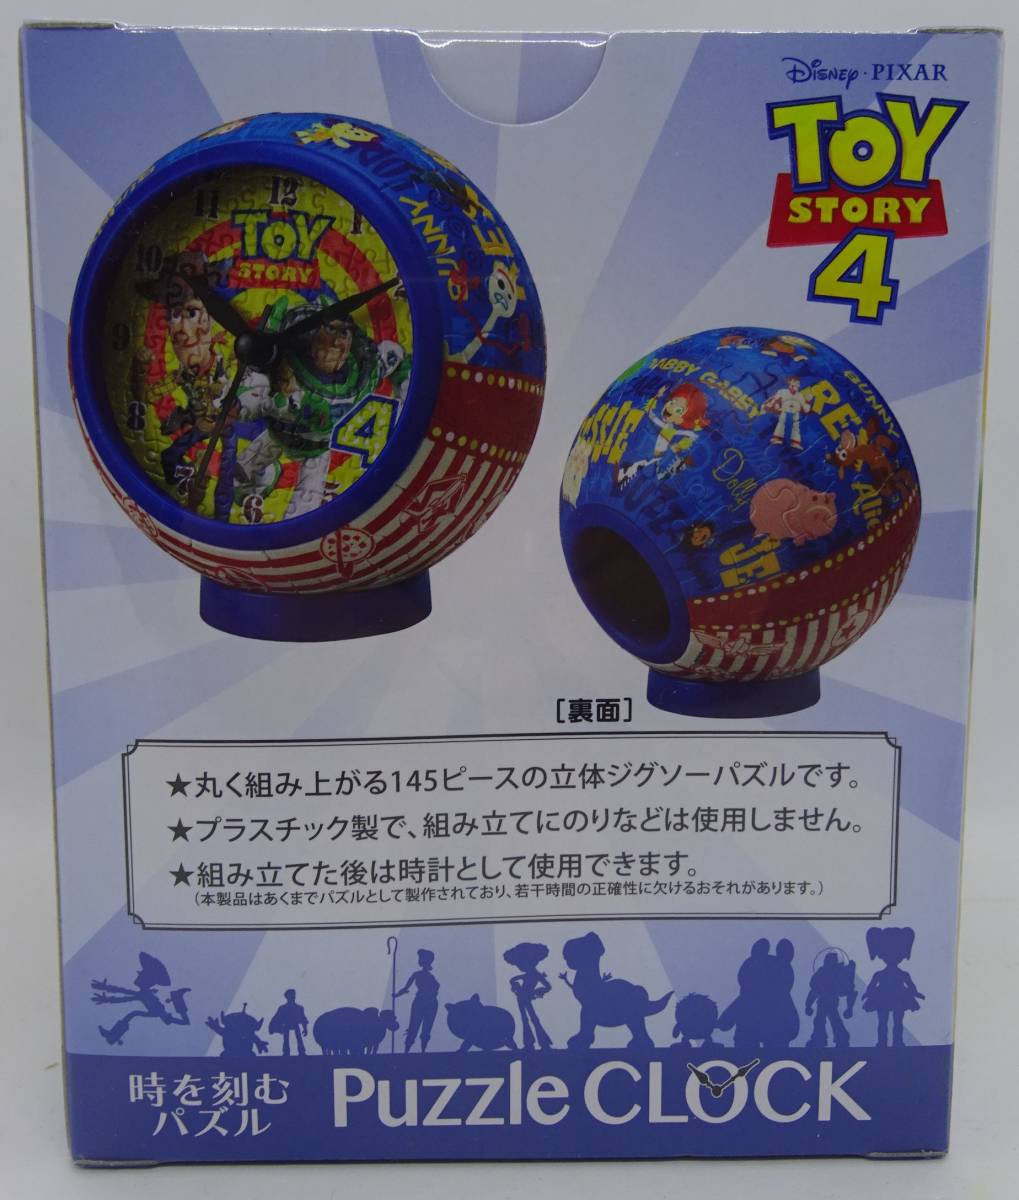 ya. .. puzzle clock toy * -stroke - Lee 4 american pop 145pcs hour ... puzzle 2401-06